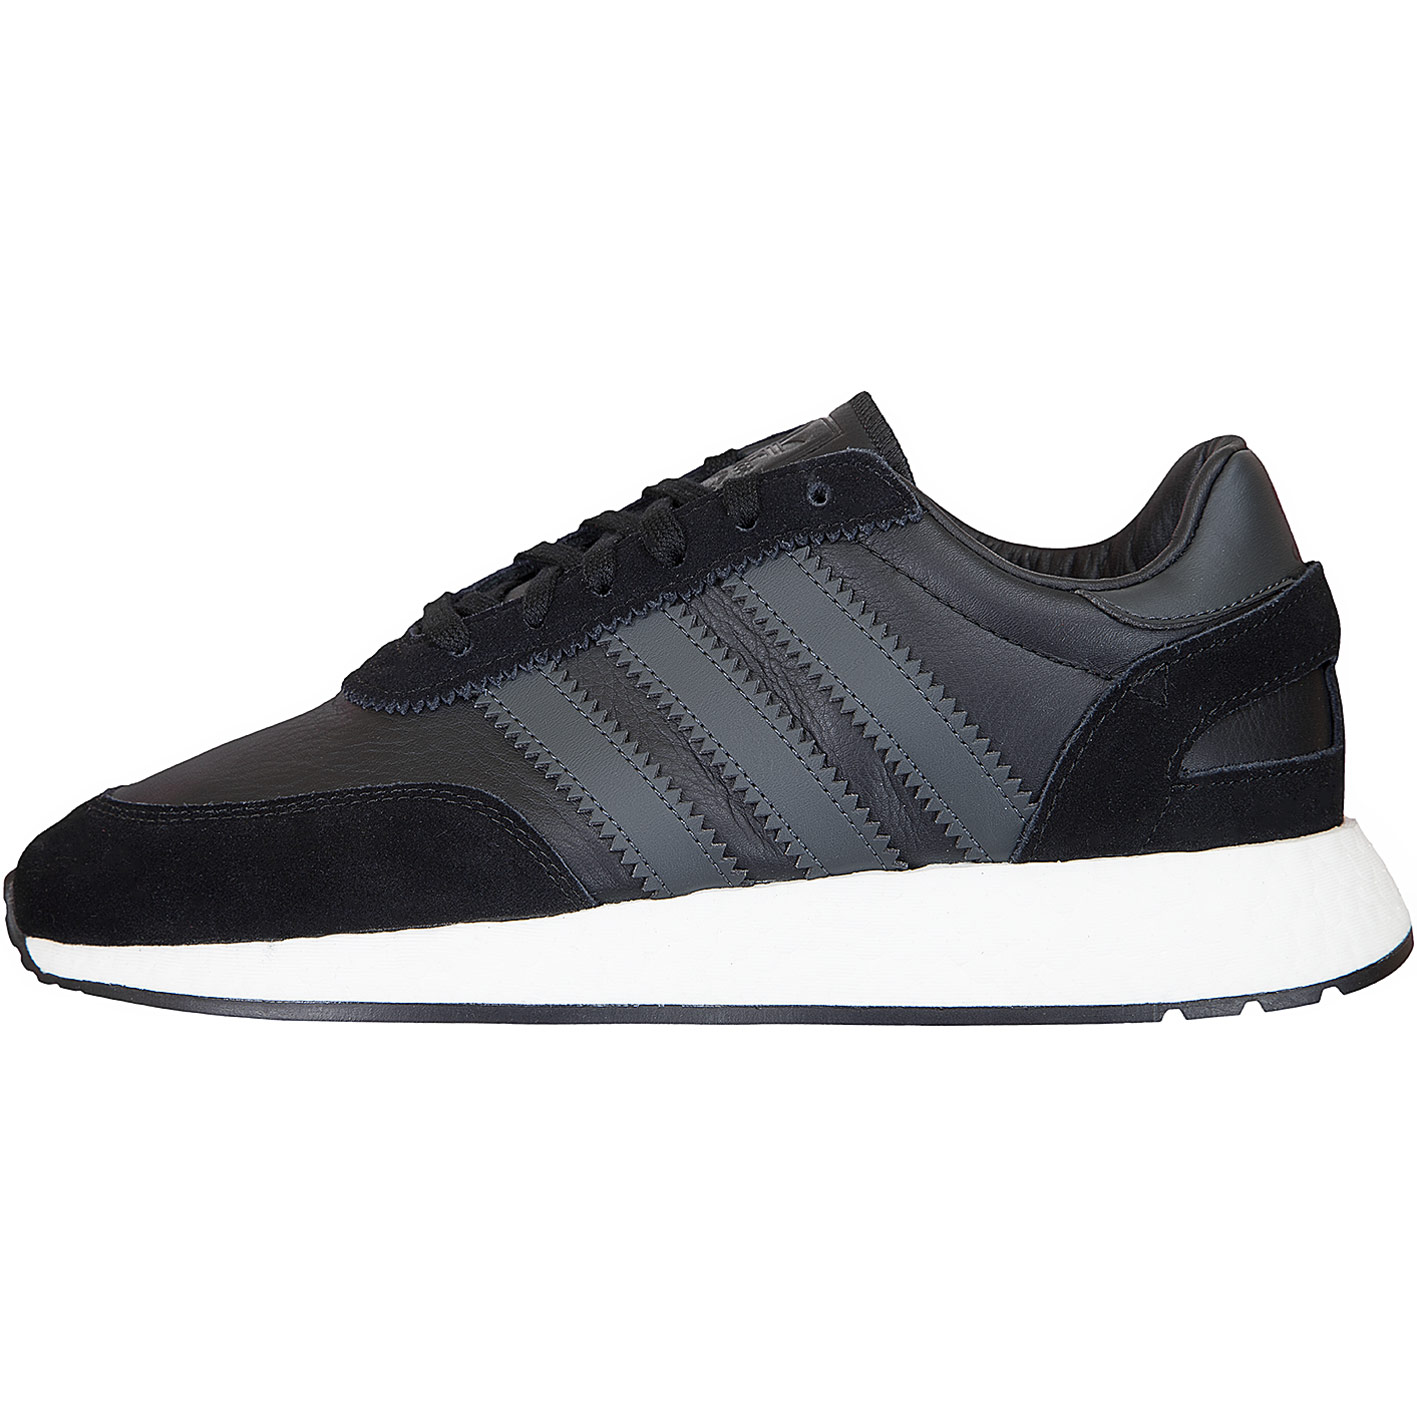 ☆ Adidas Originals Sneaker I-5923 schwarz - hier bestellen!